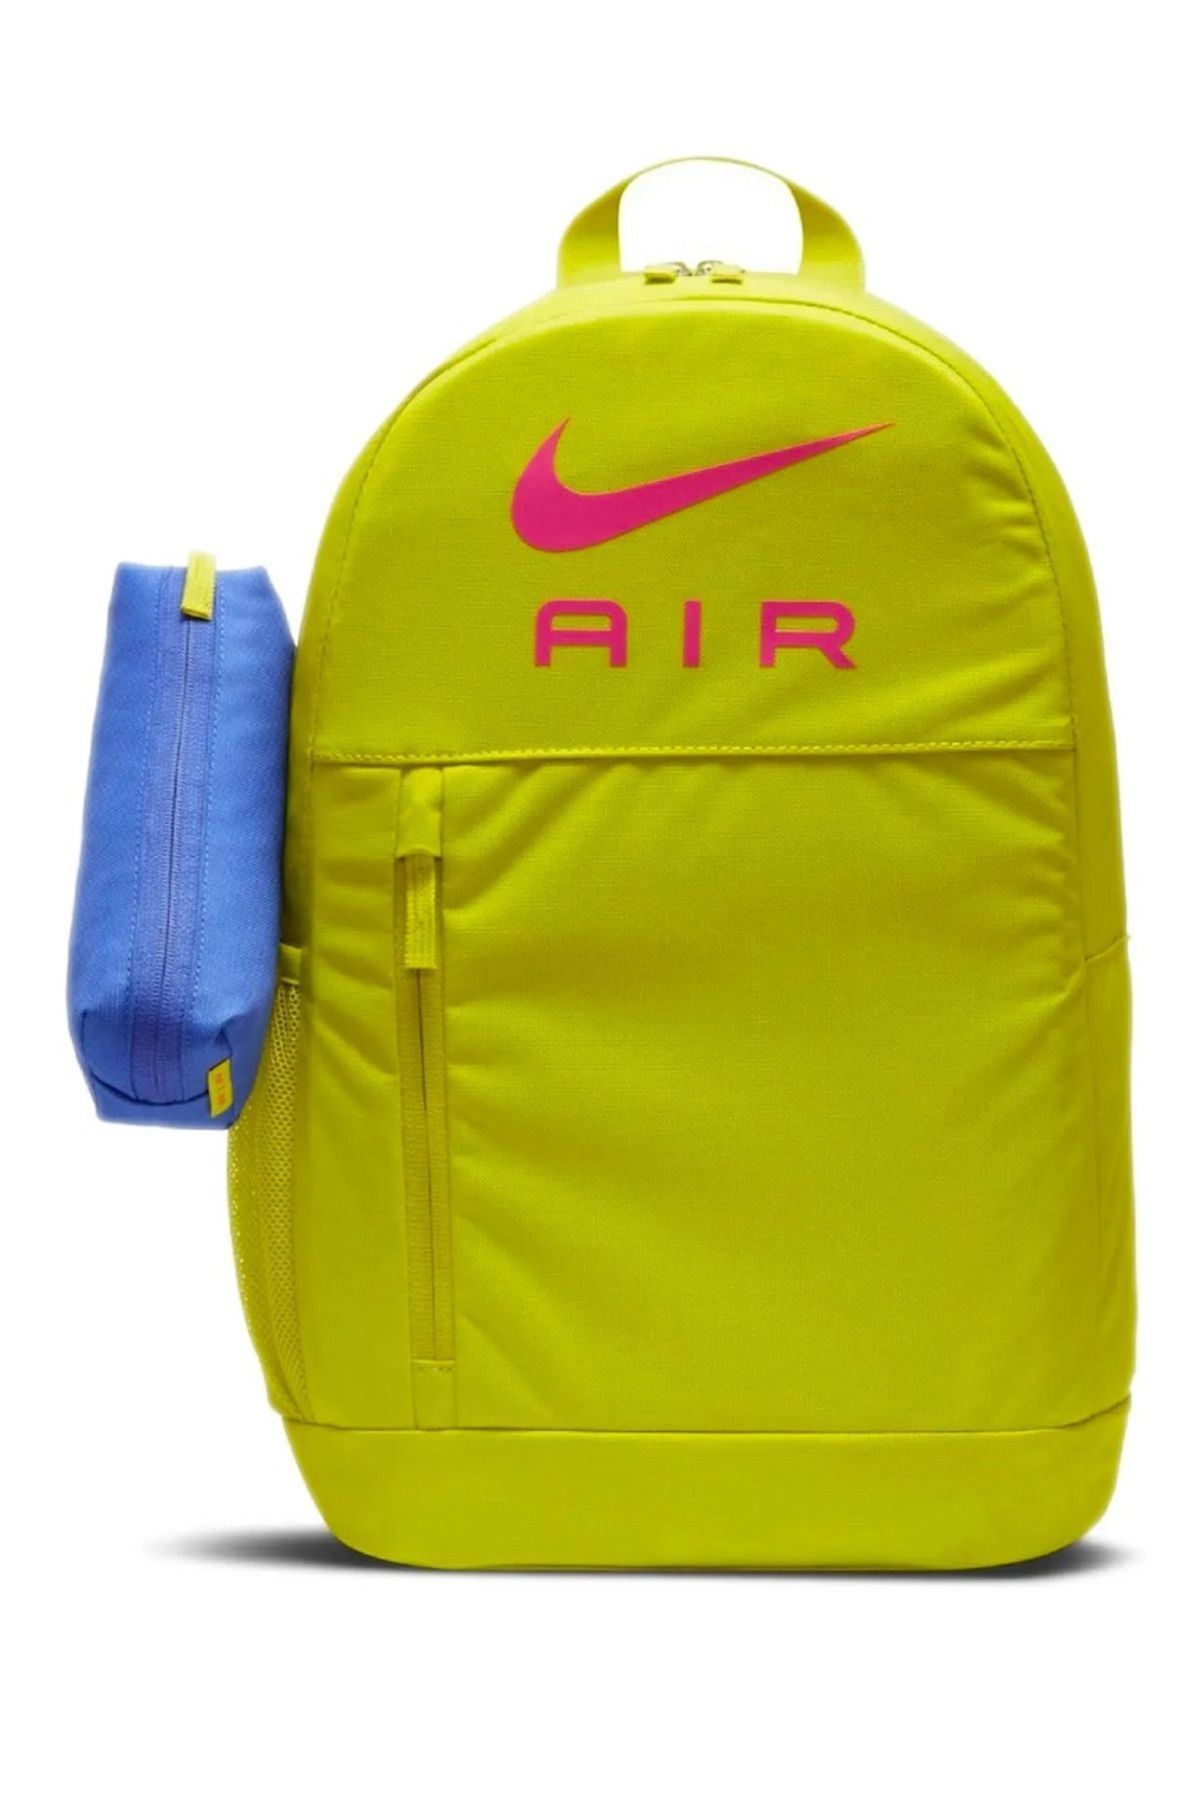 Nike Sırt Çantası Nike Air Çanta Kalemlikli